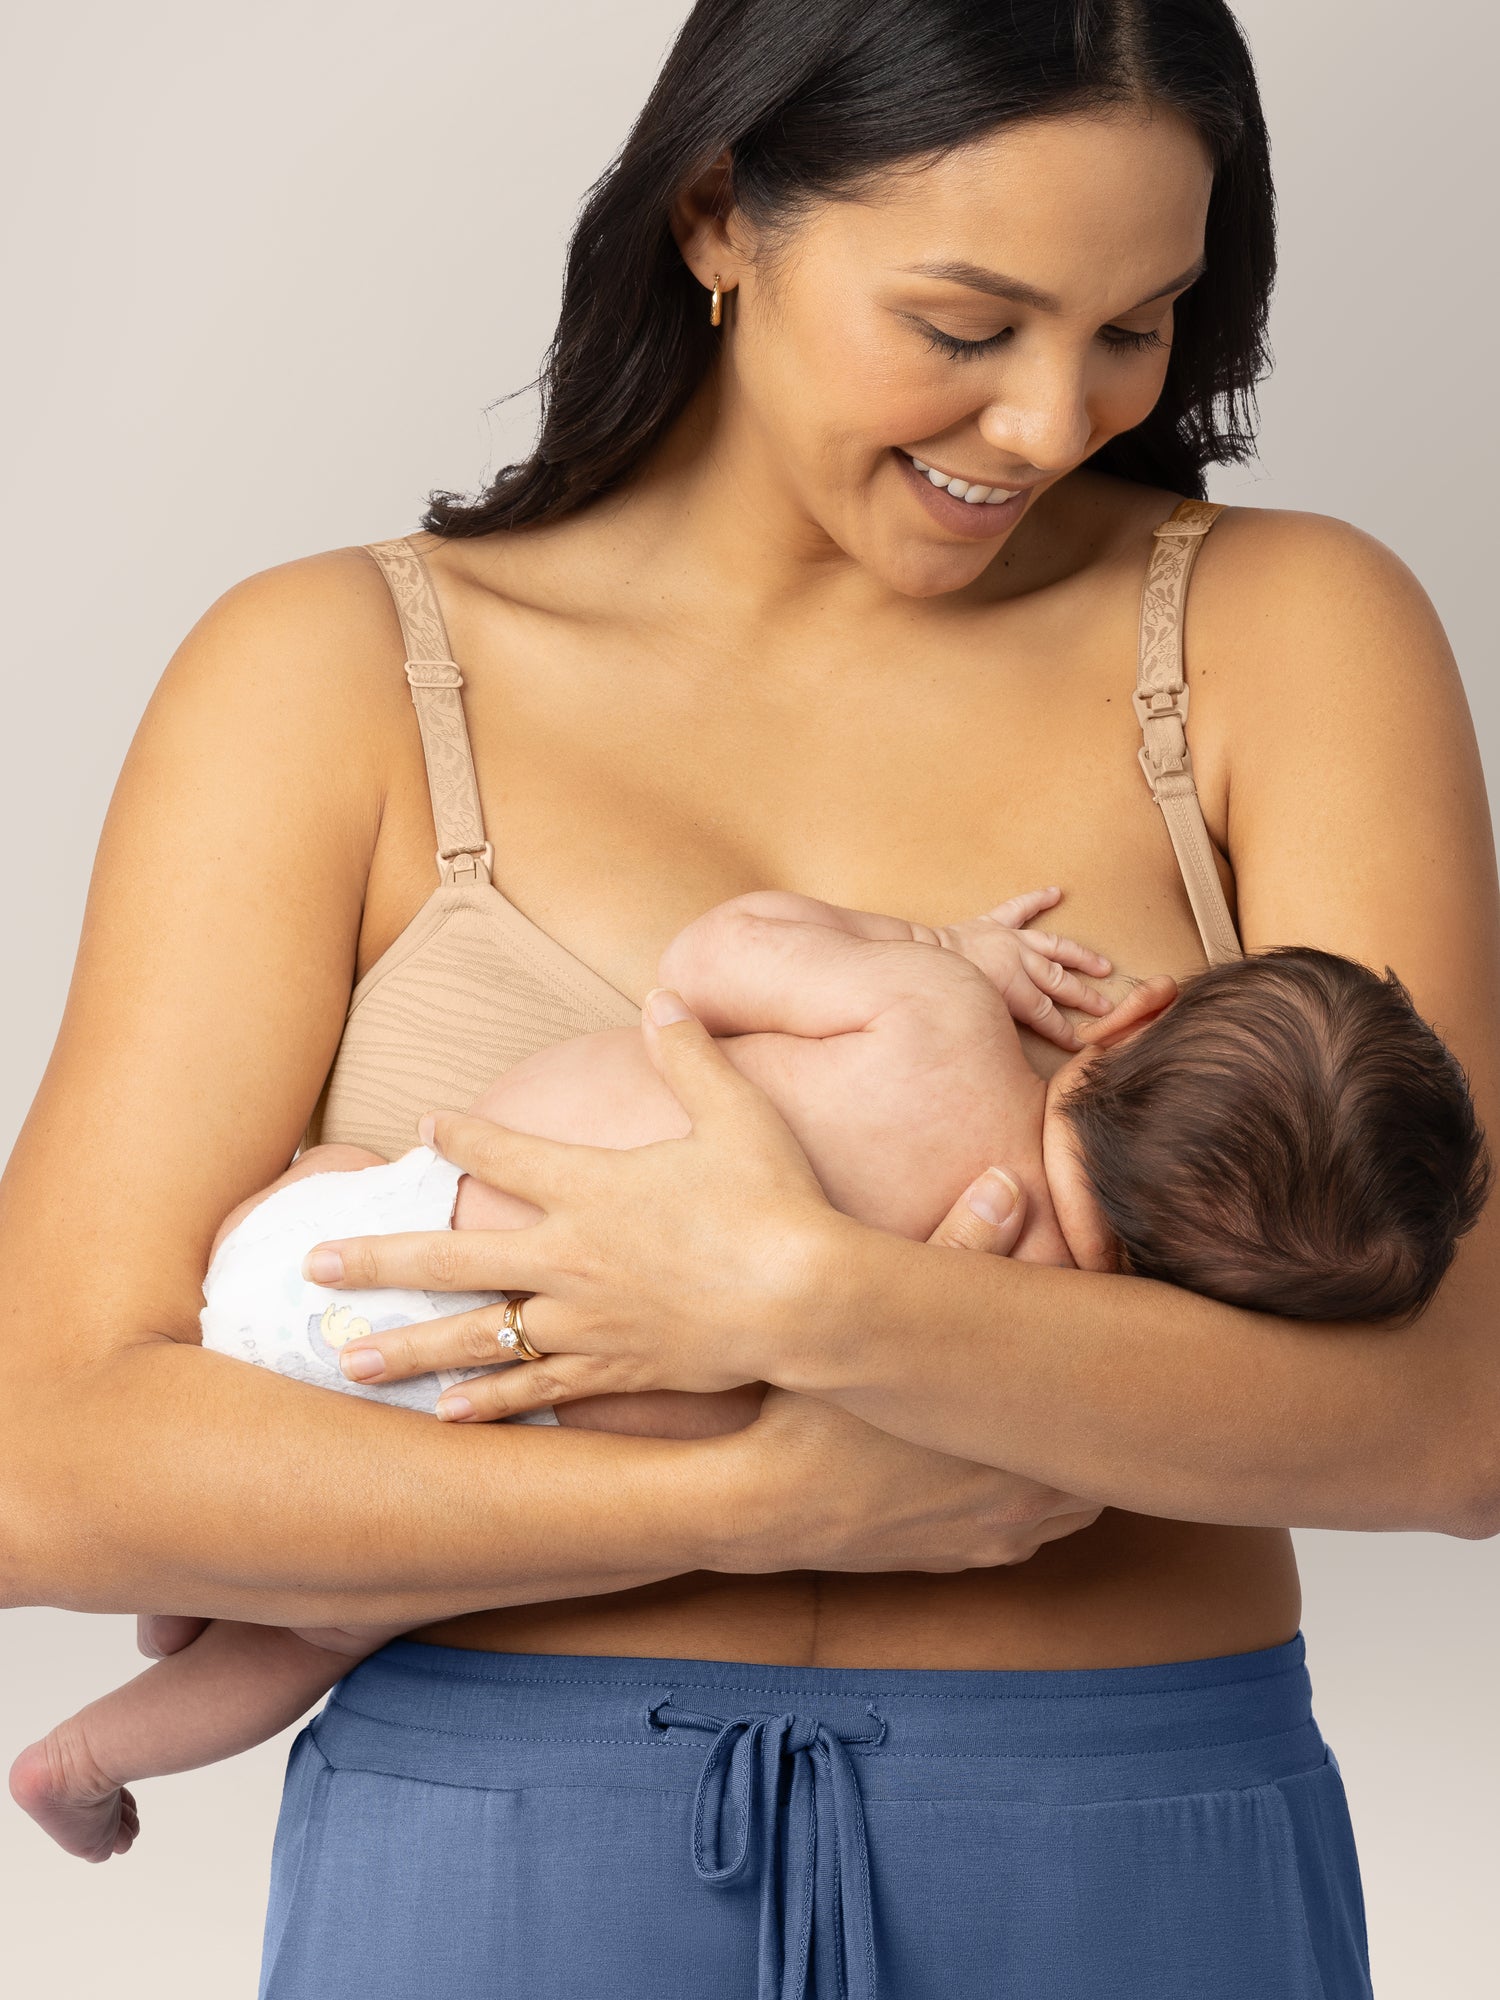 Spectra S9+ Breast Pump + Hands Free Bra, Babies & Kids, Nursing